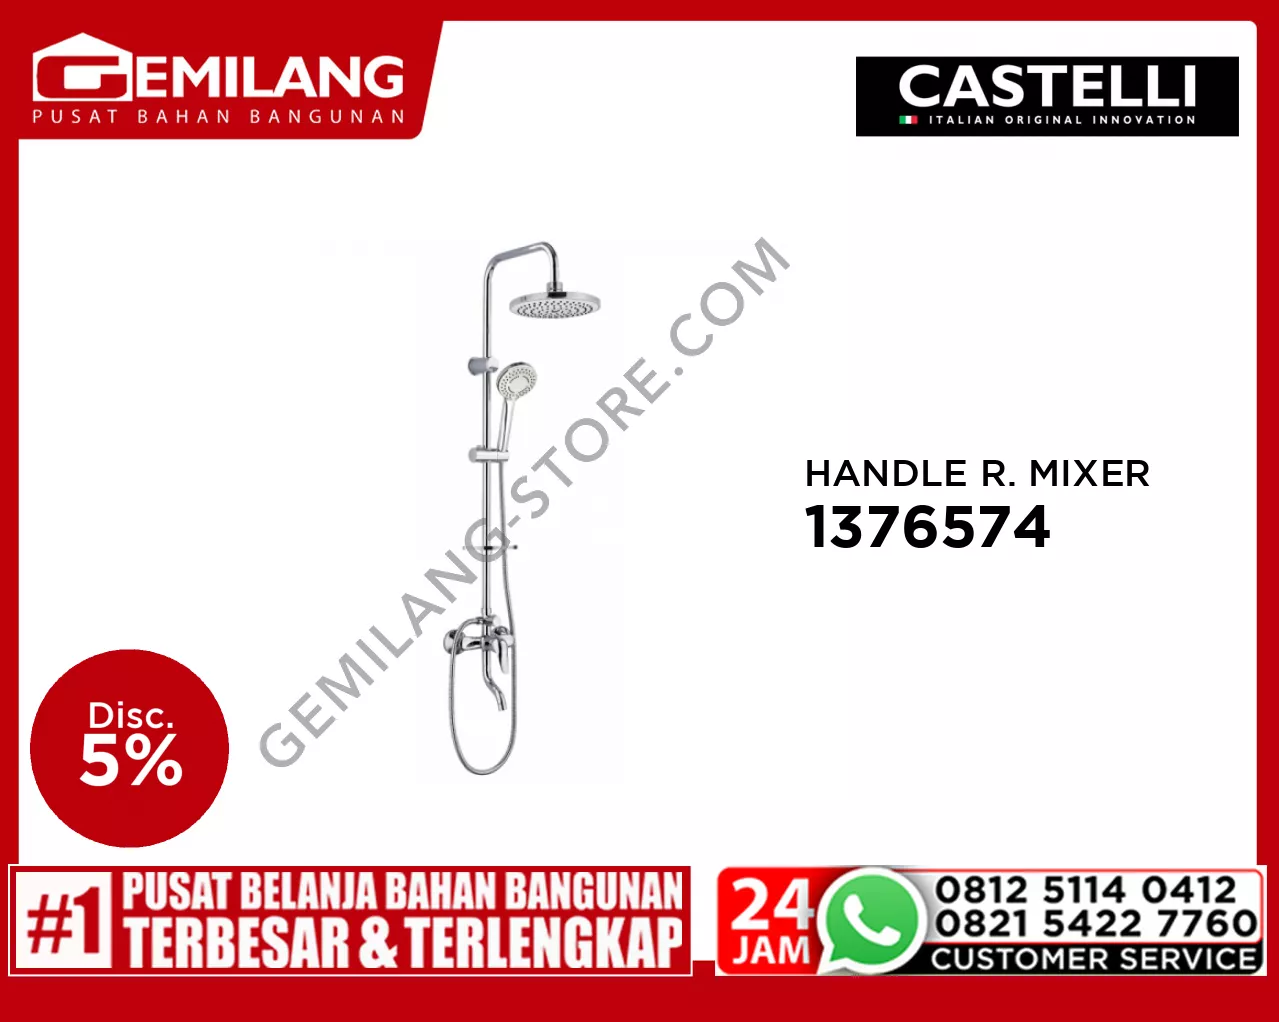 CASTELLI SINGLE HANDLE RAINSHOWER MIXER SET 1376574